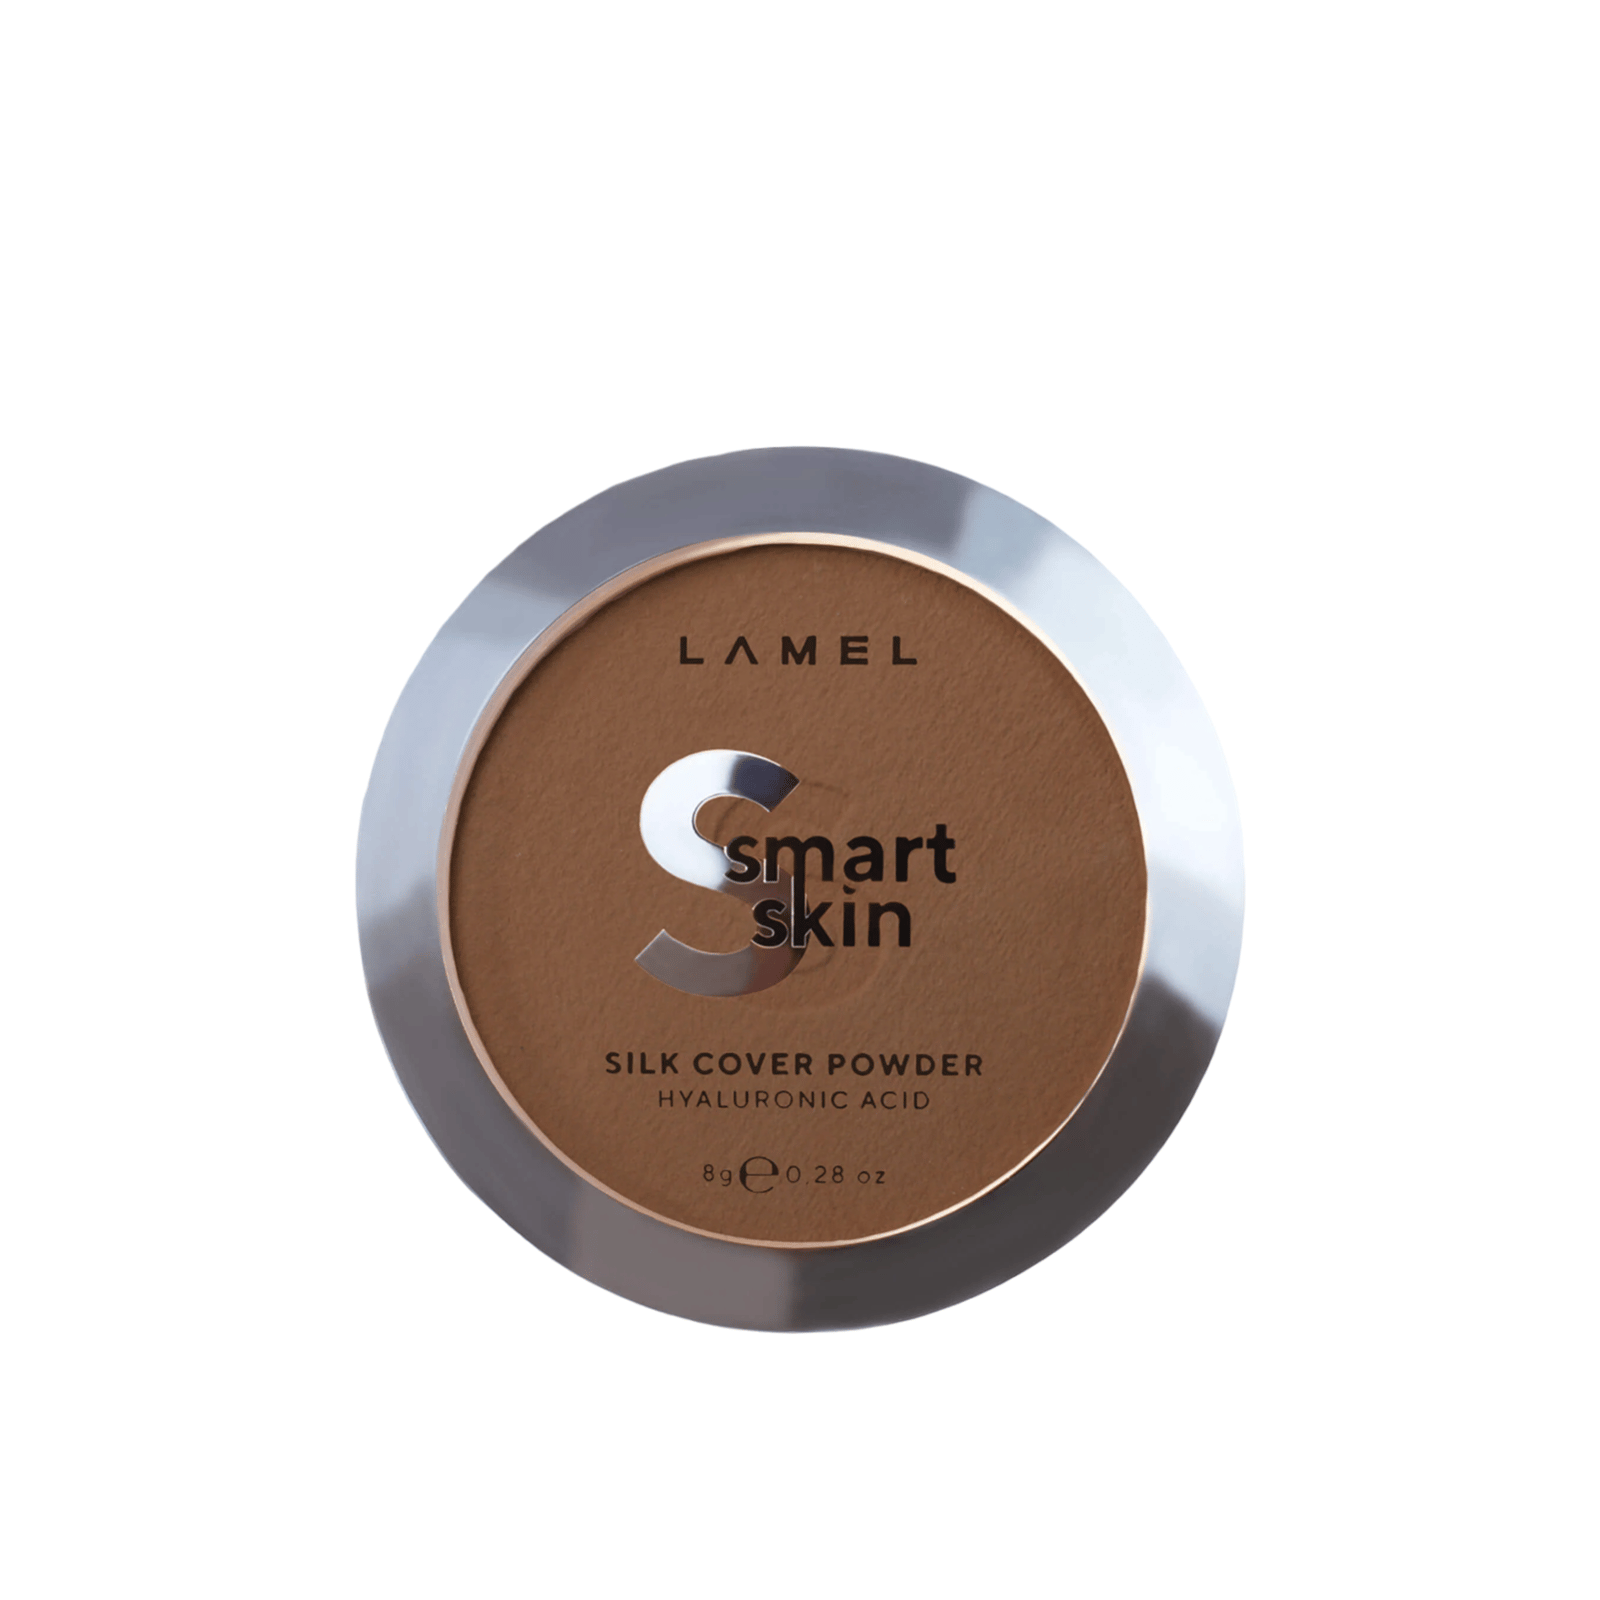 Lamel Smart Skin Silk Cover Powder 406 Deep Brown 8g